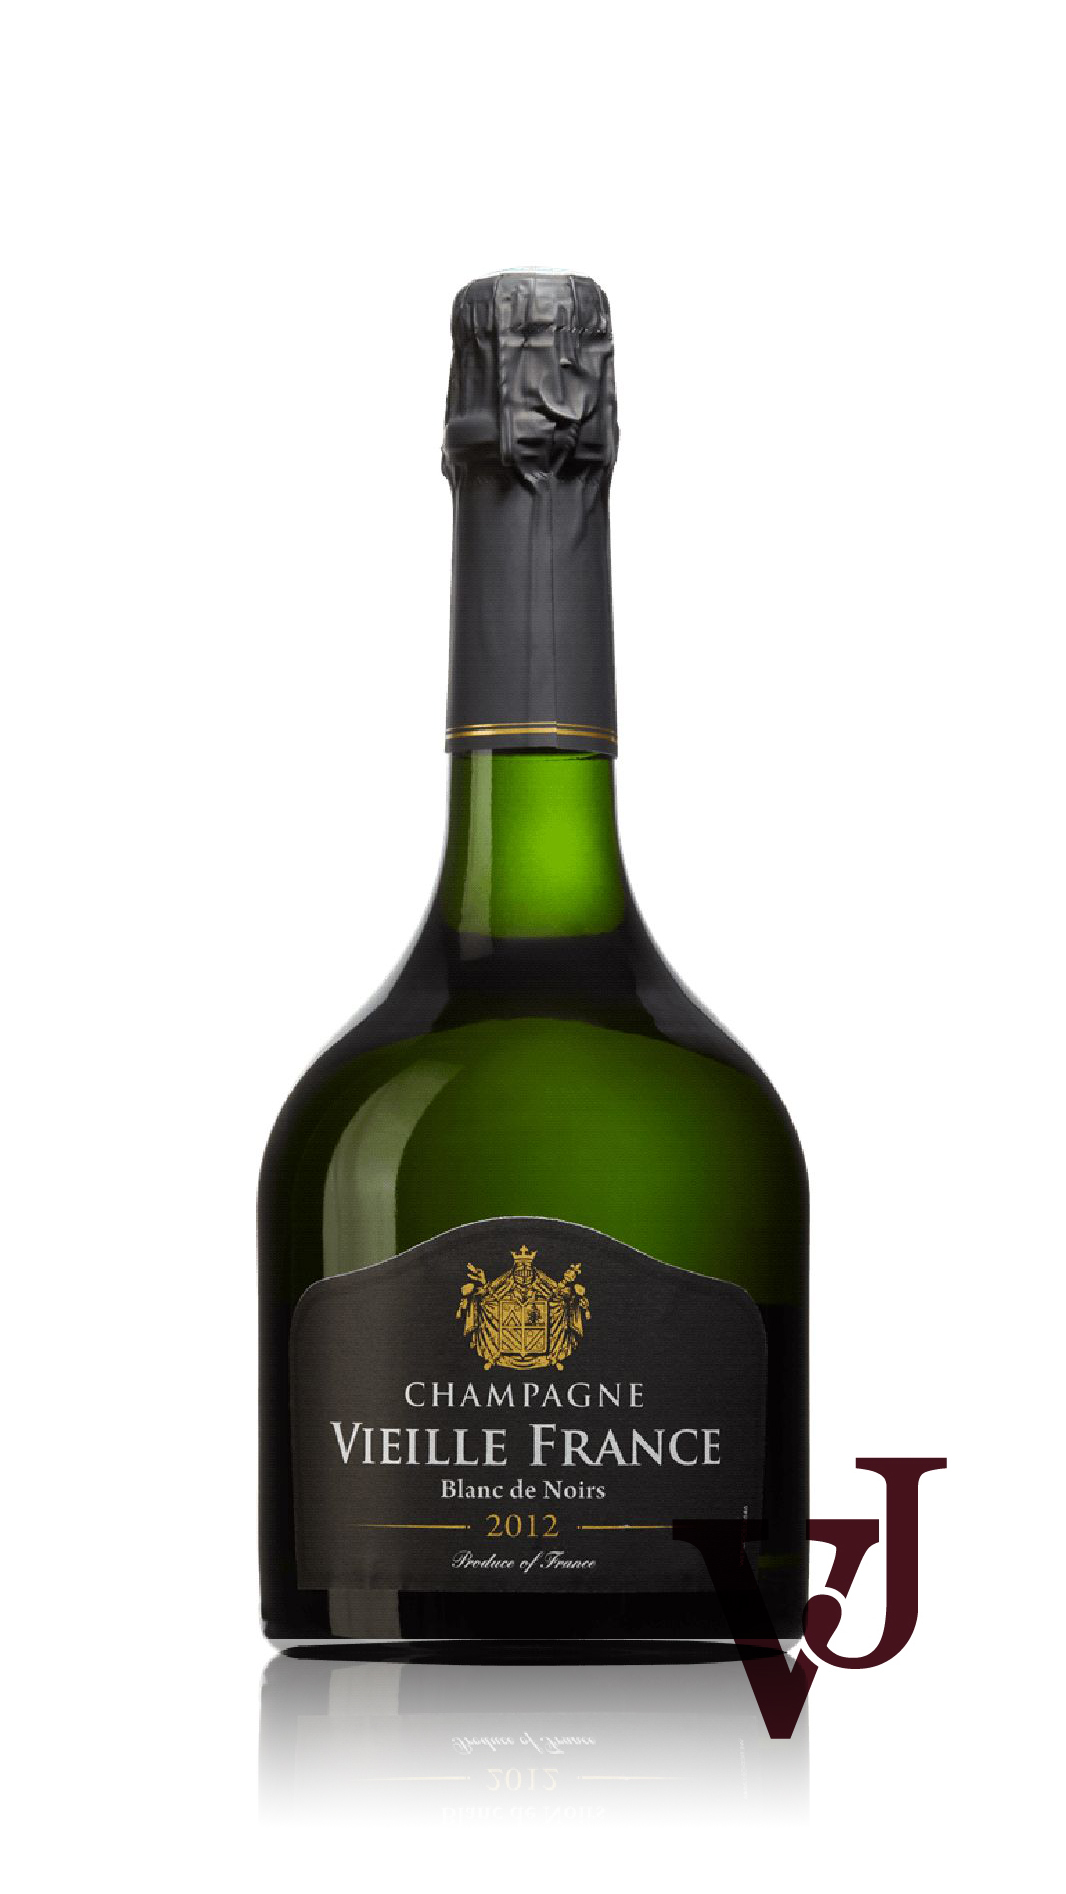 Mousserande Vin - Champagne Vieille France Blanc de Noirs artikel nummer 205401 från producenten Charles de Cazanove från området Frankrike